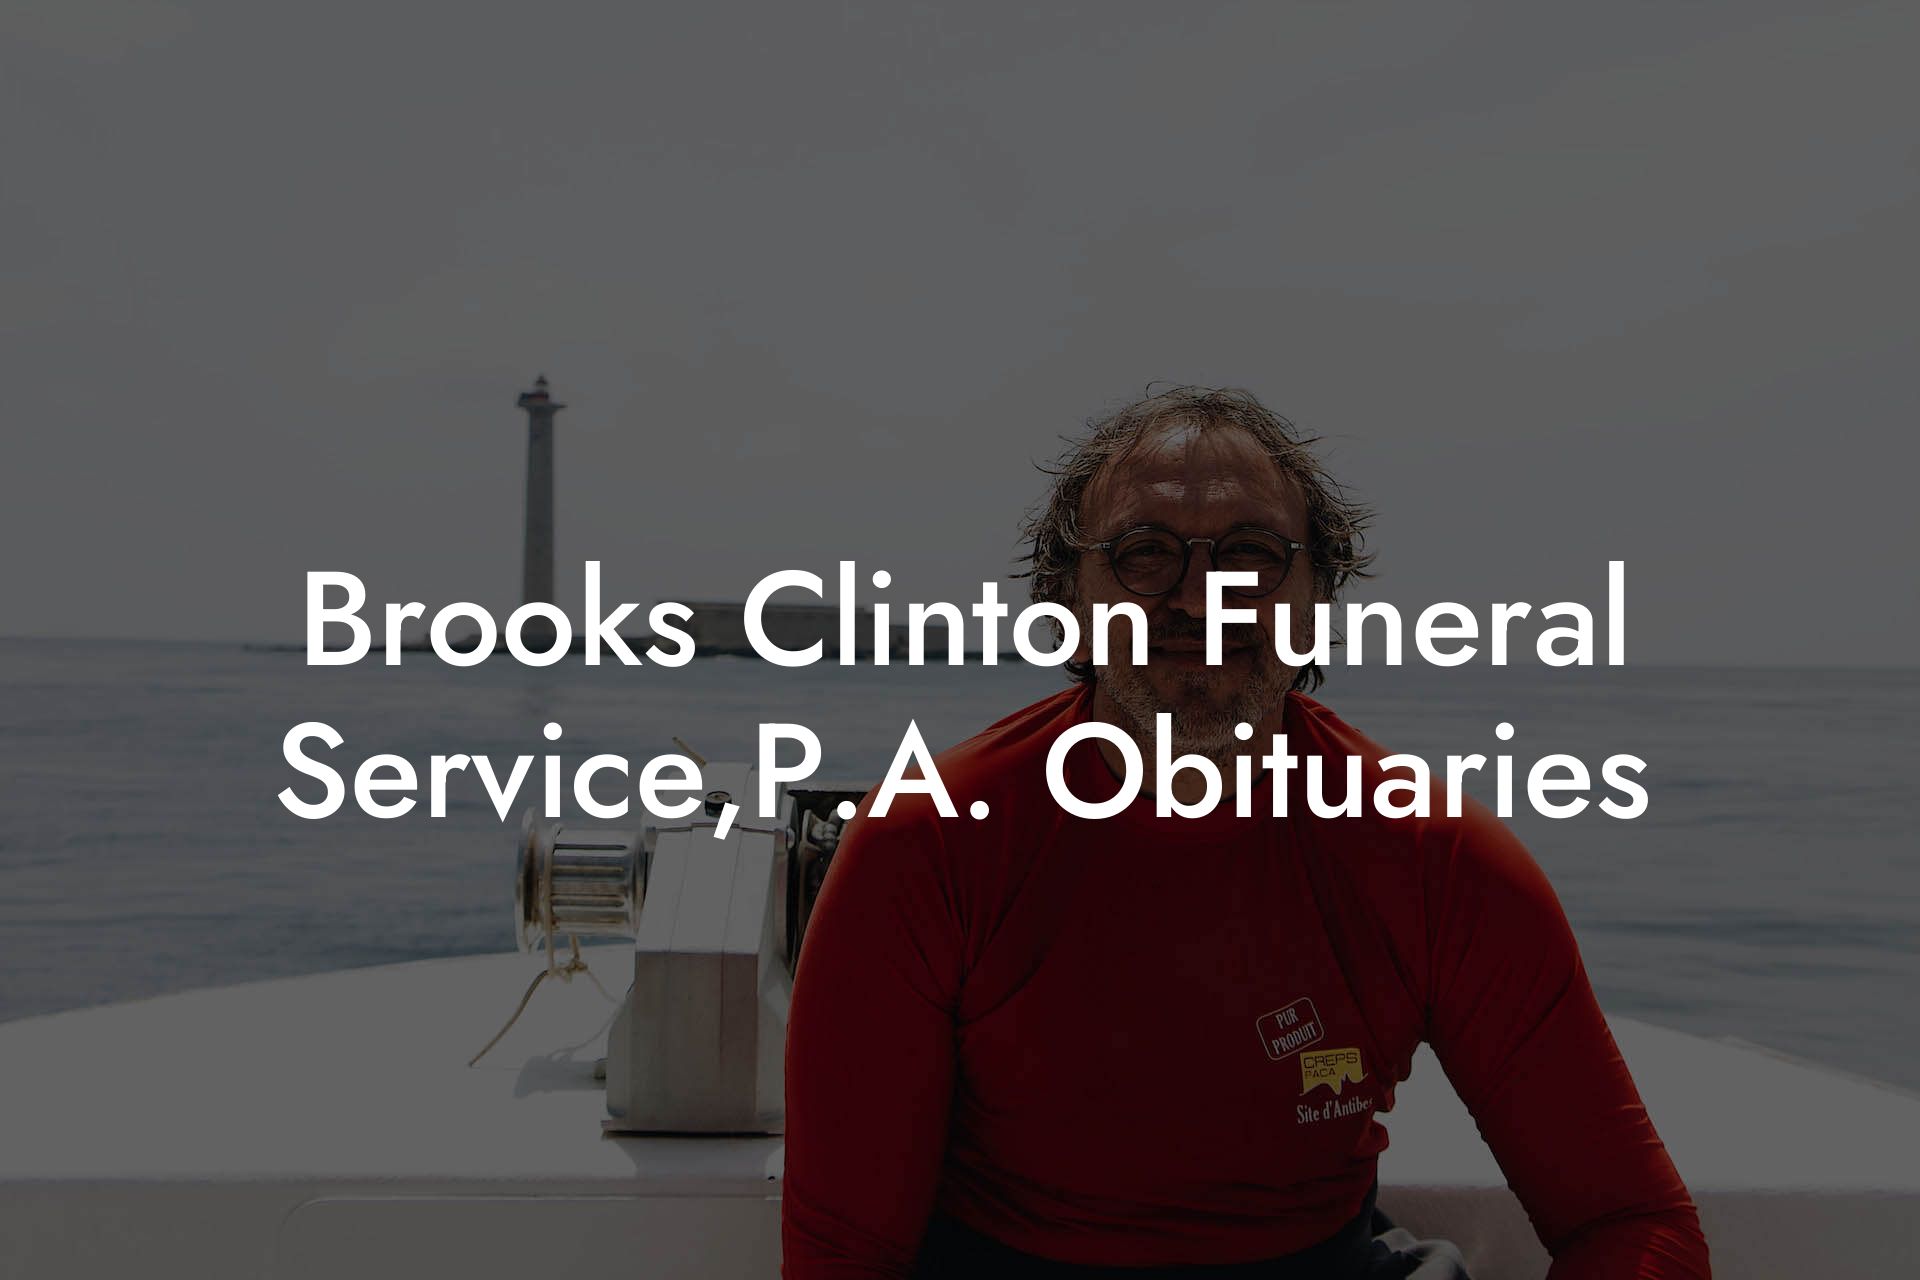 Brooks Clinton Funeral Service,P.A. Obituaries